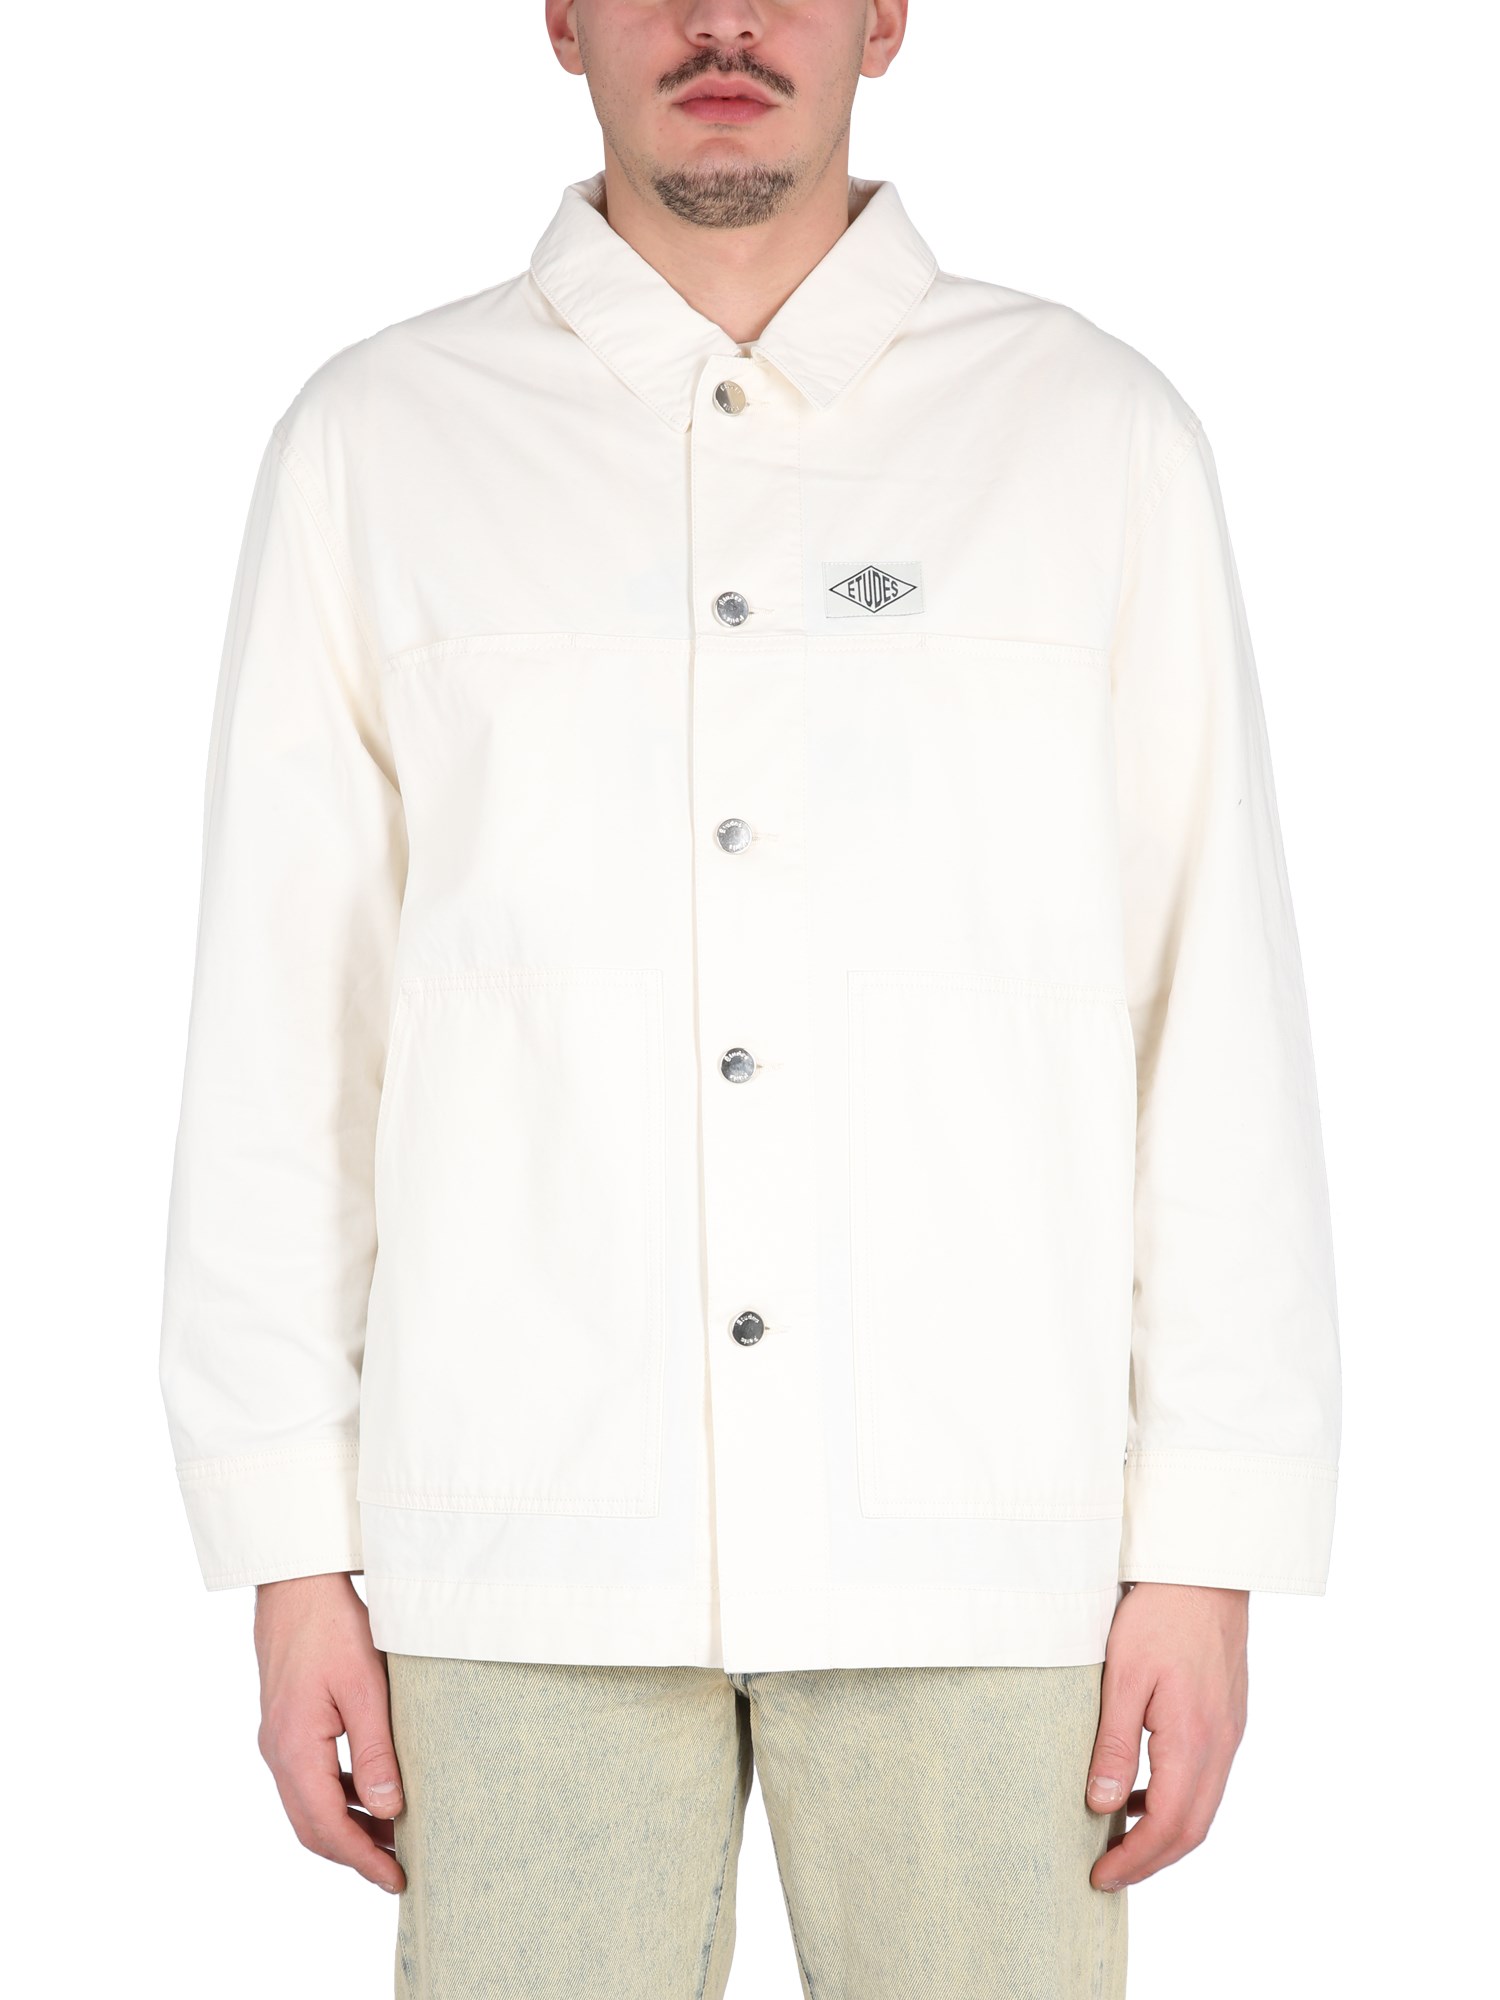 Ã©tudes cotton shirt jacket